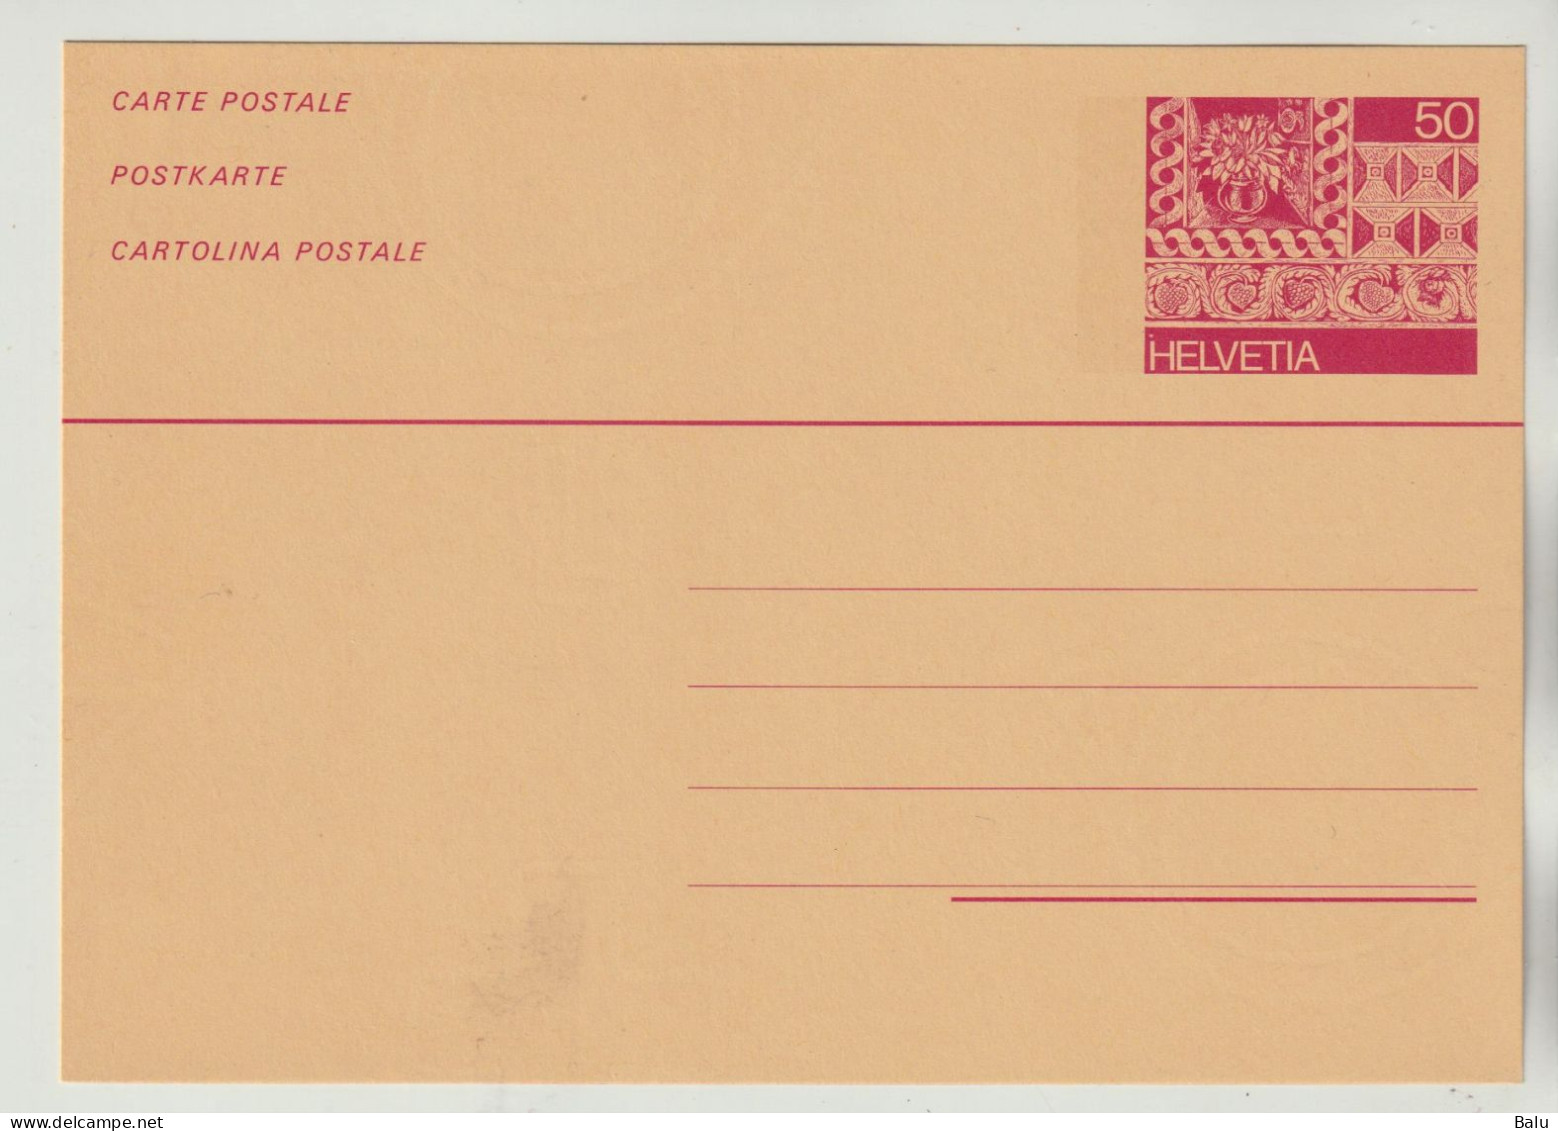 Schweiz Ganzsache 1984 Helvetia 50 Rp. Postkarte Fassadenmalerei, NEU, Siehe 2 Scans - Ganzsachen